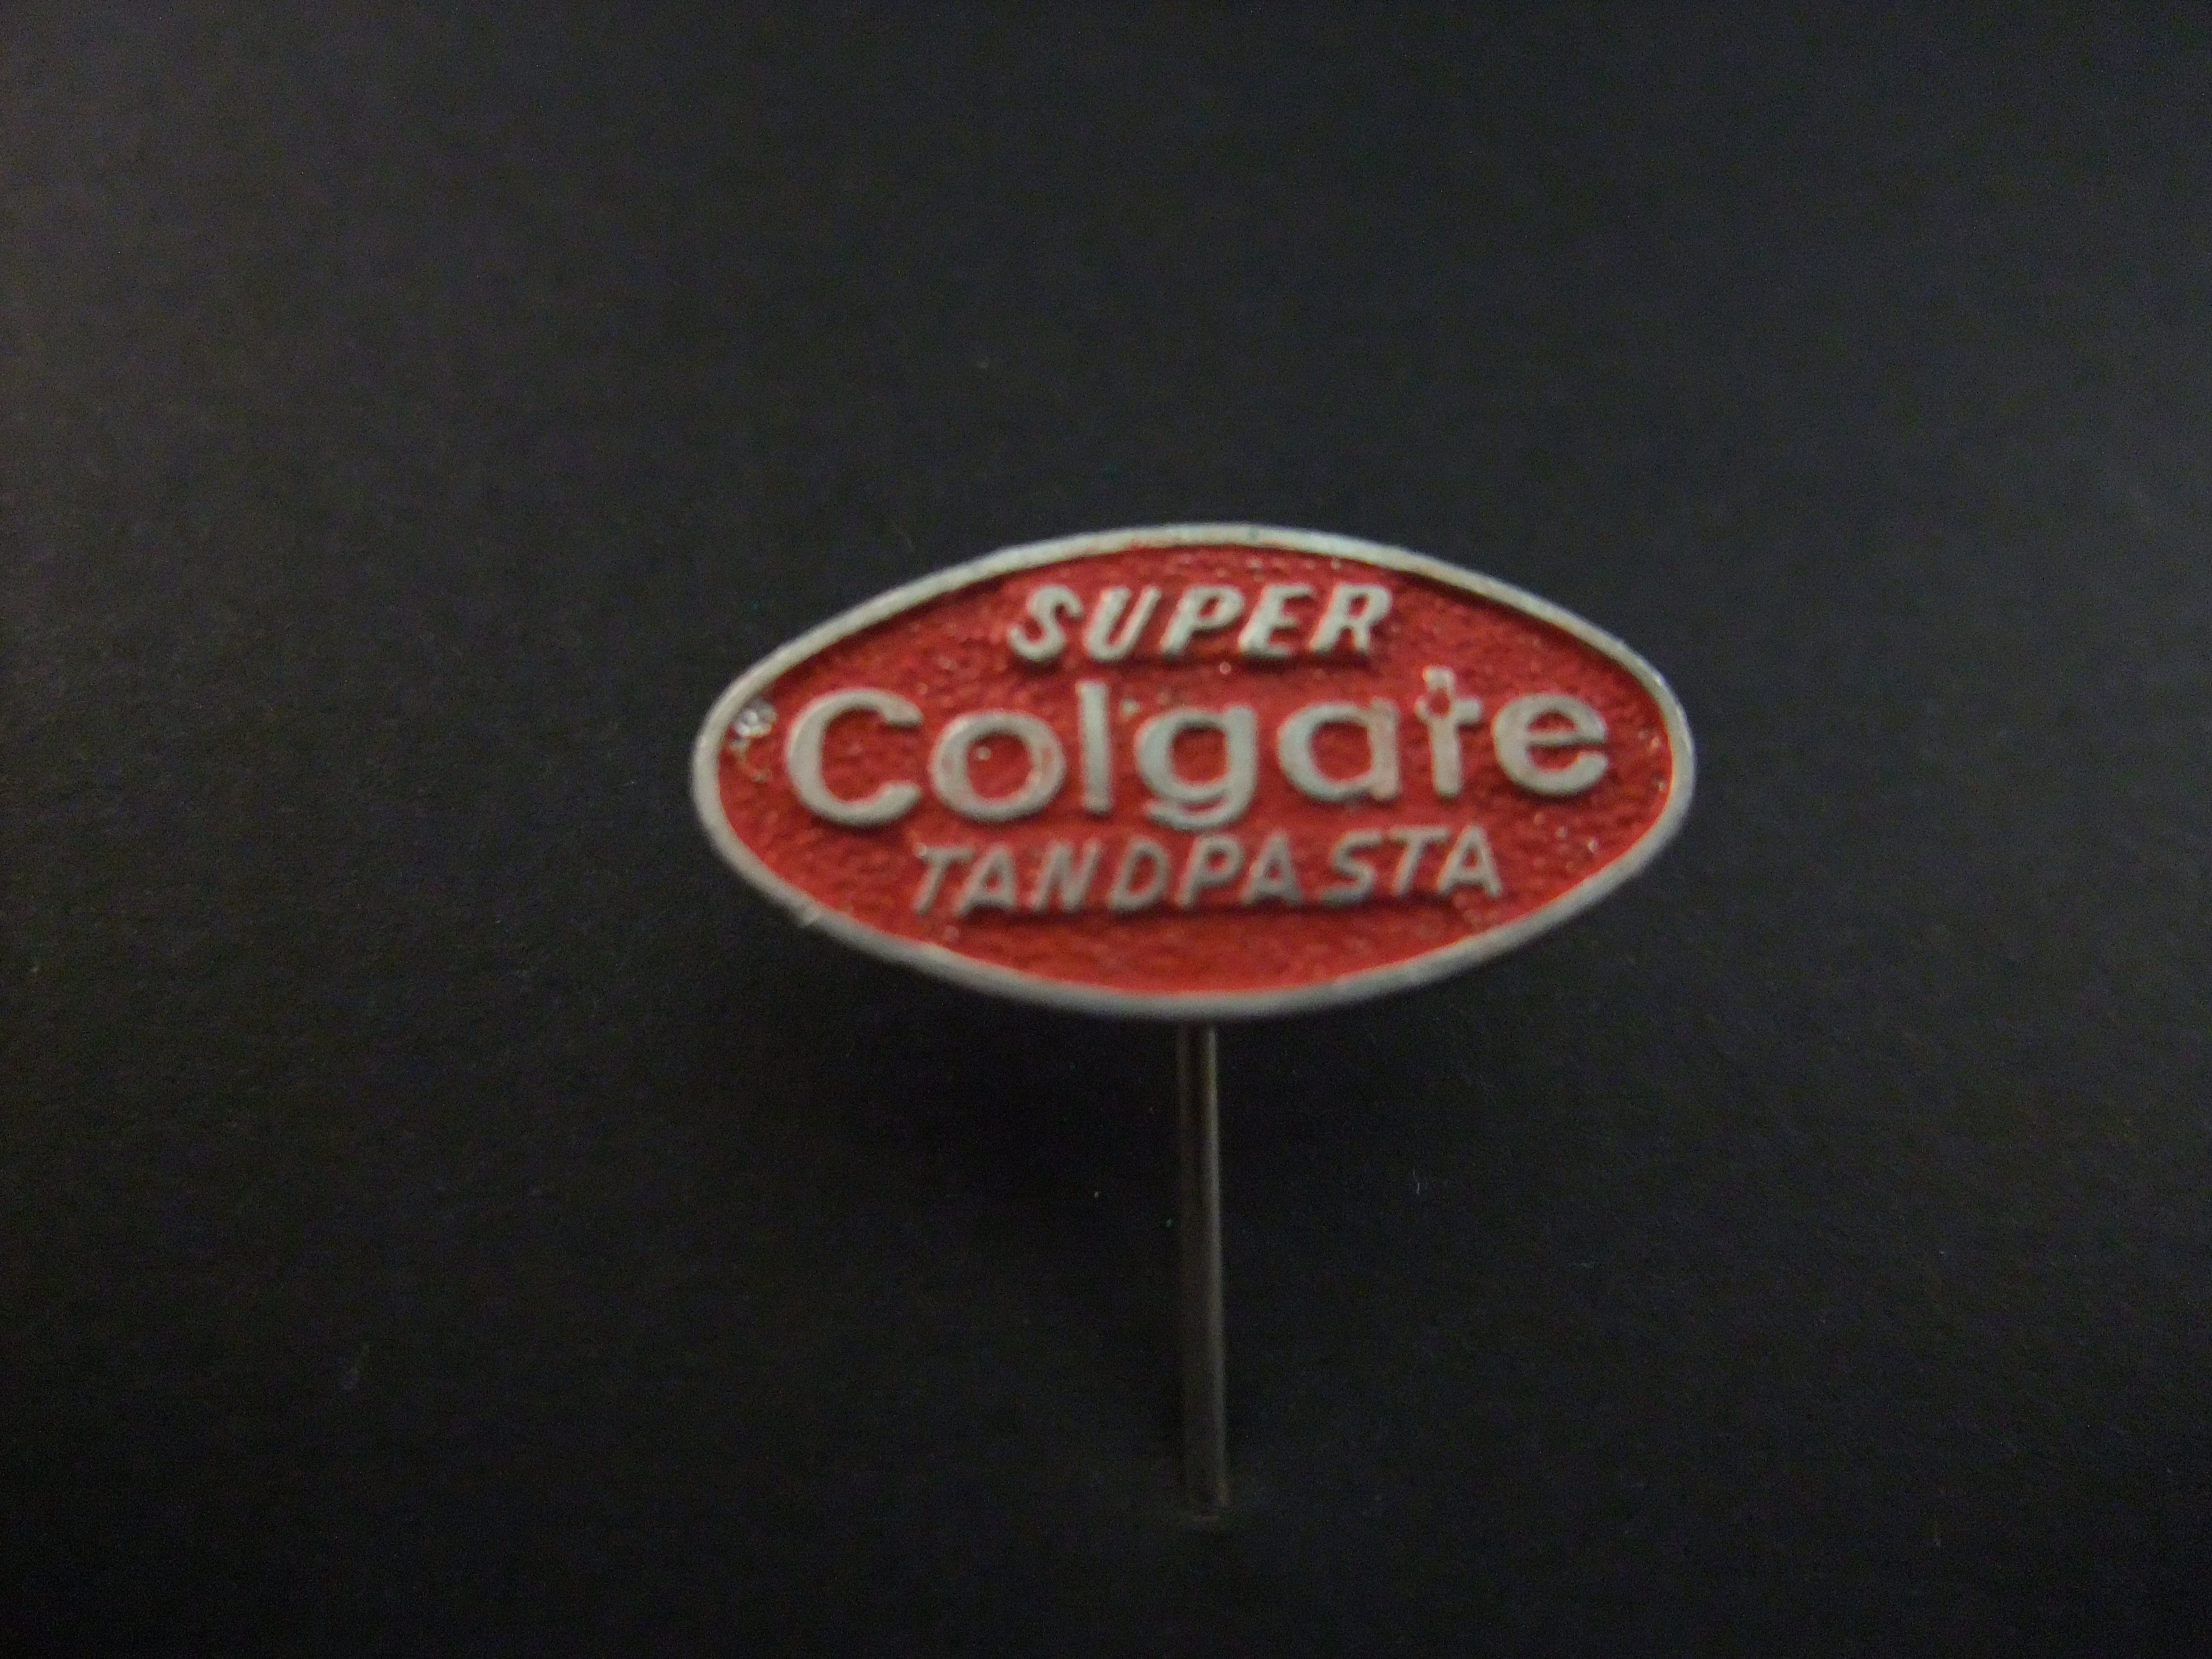 Super Colgate tandpasta, logo